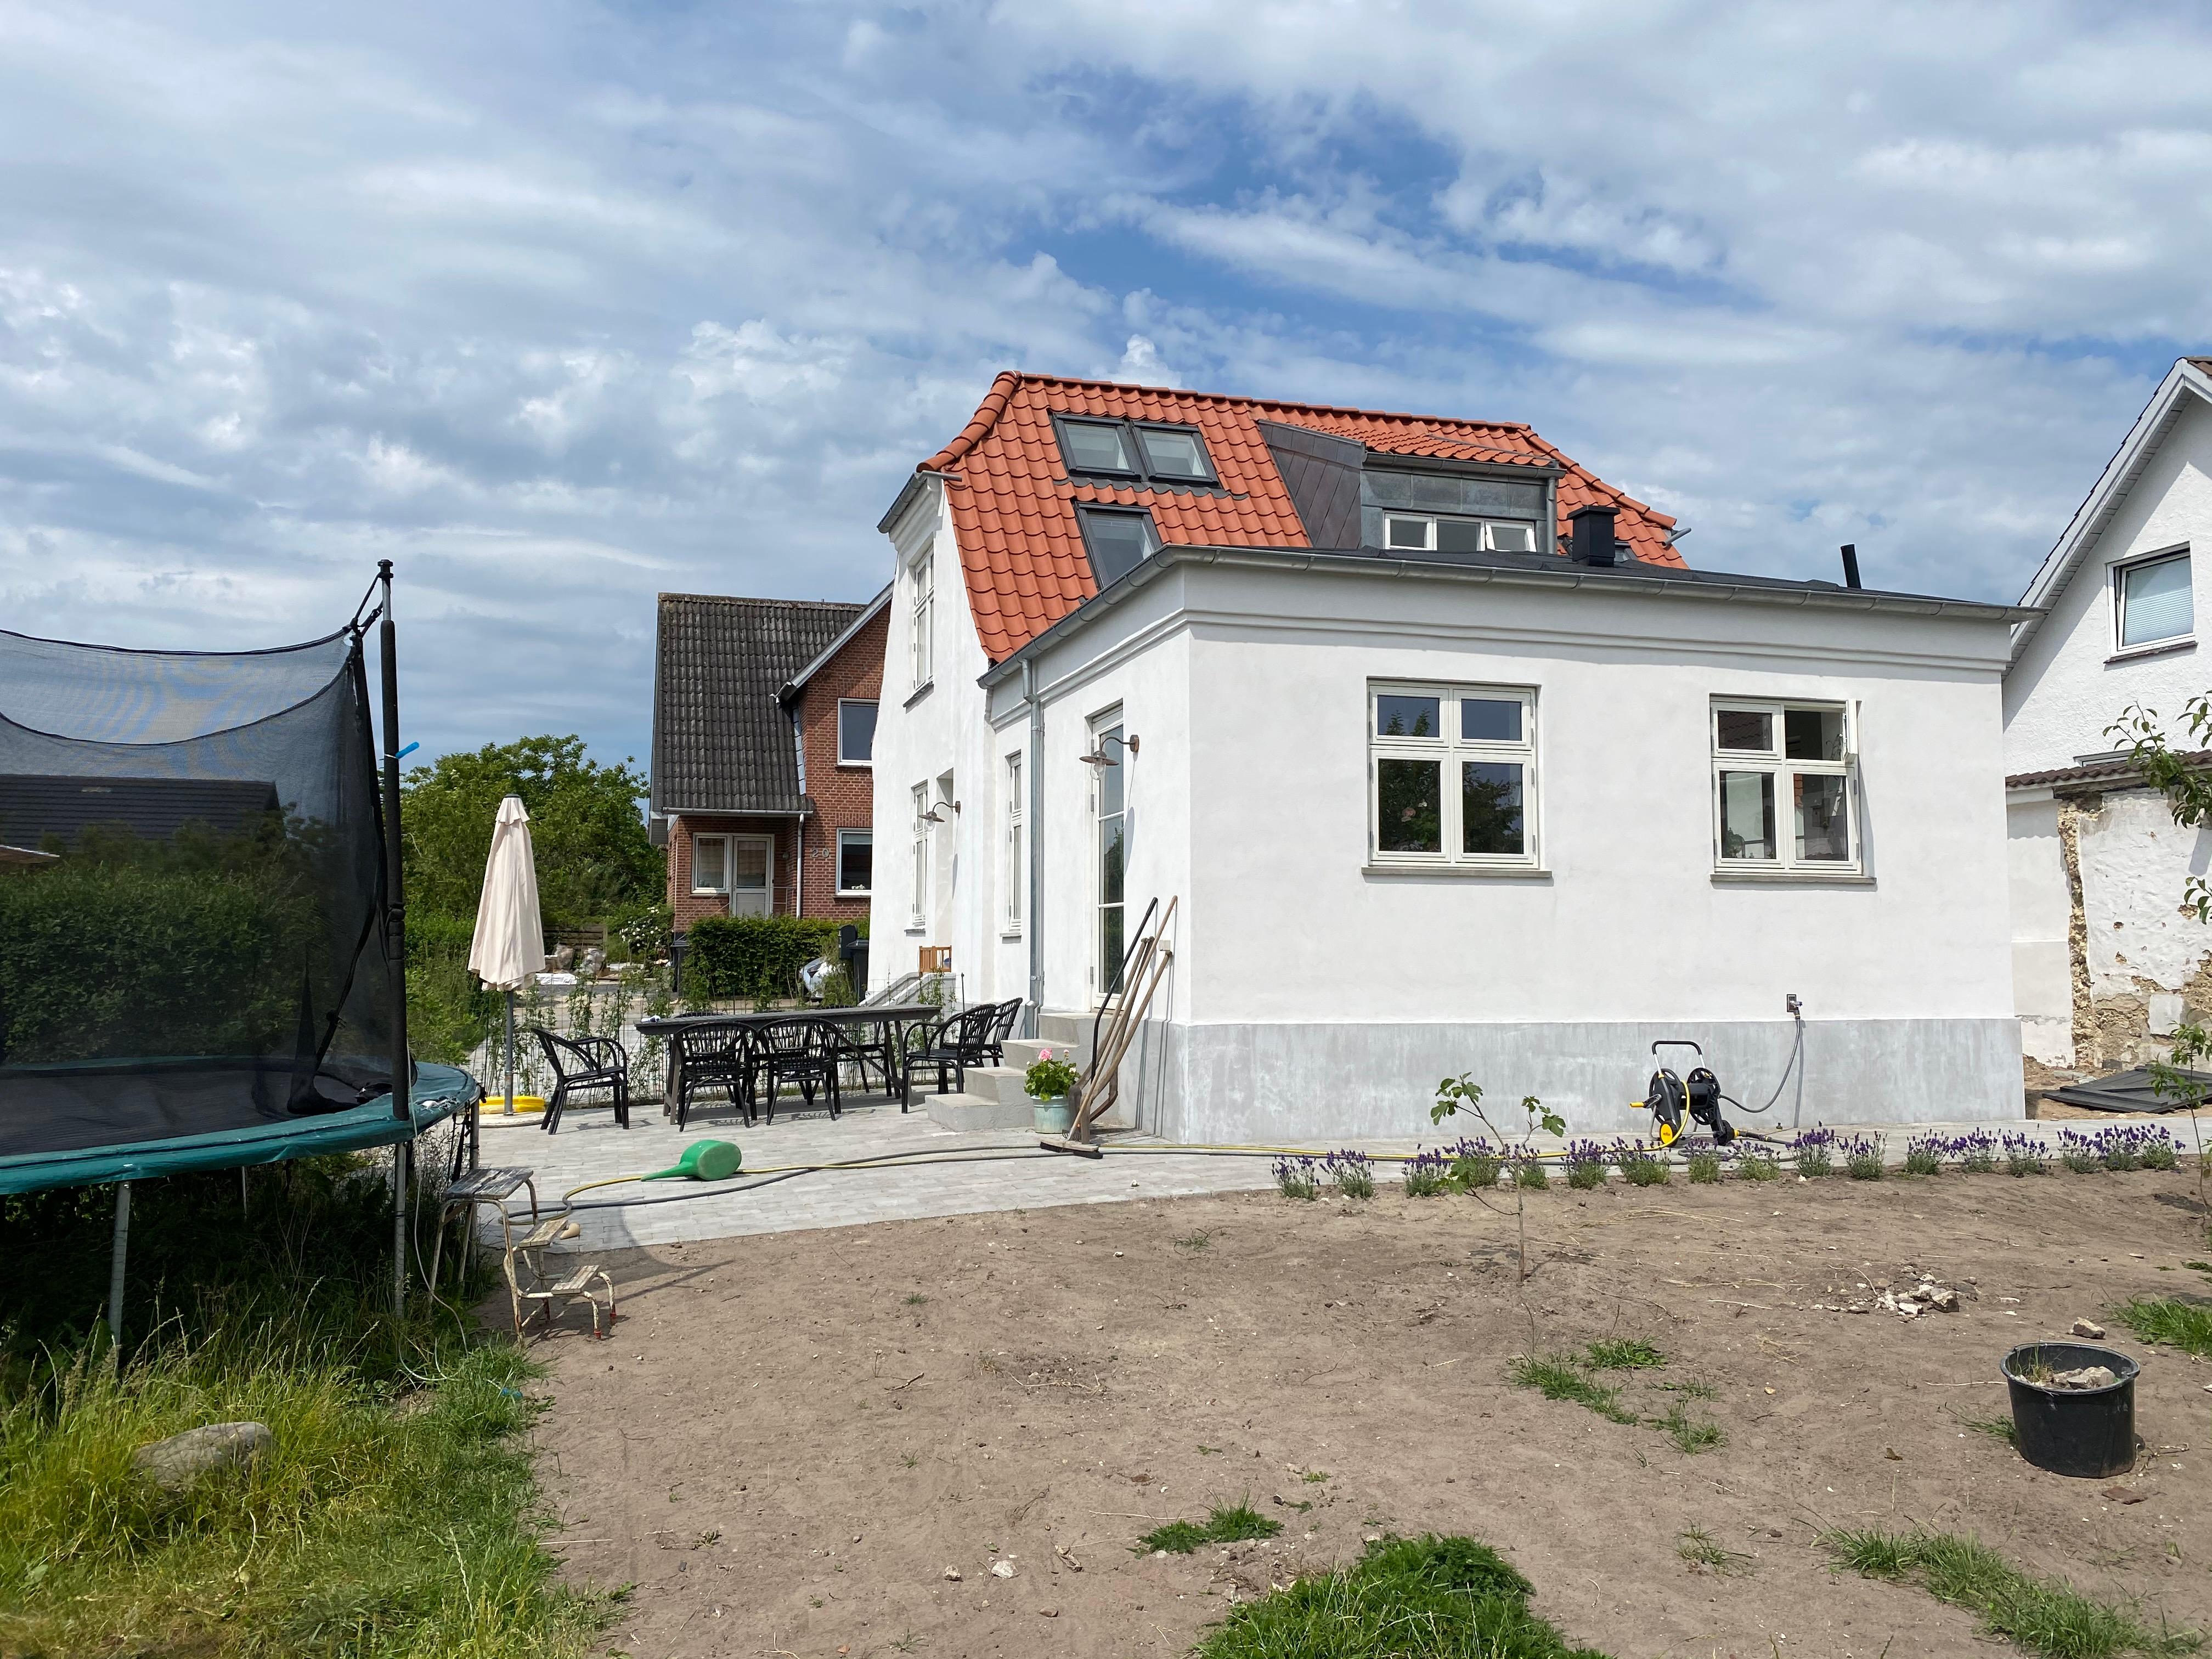 Tilbygning og kvist på hus i Nordjylland